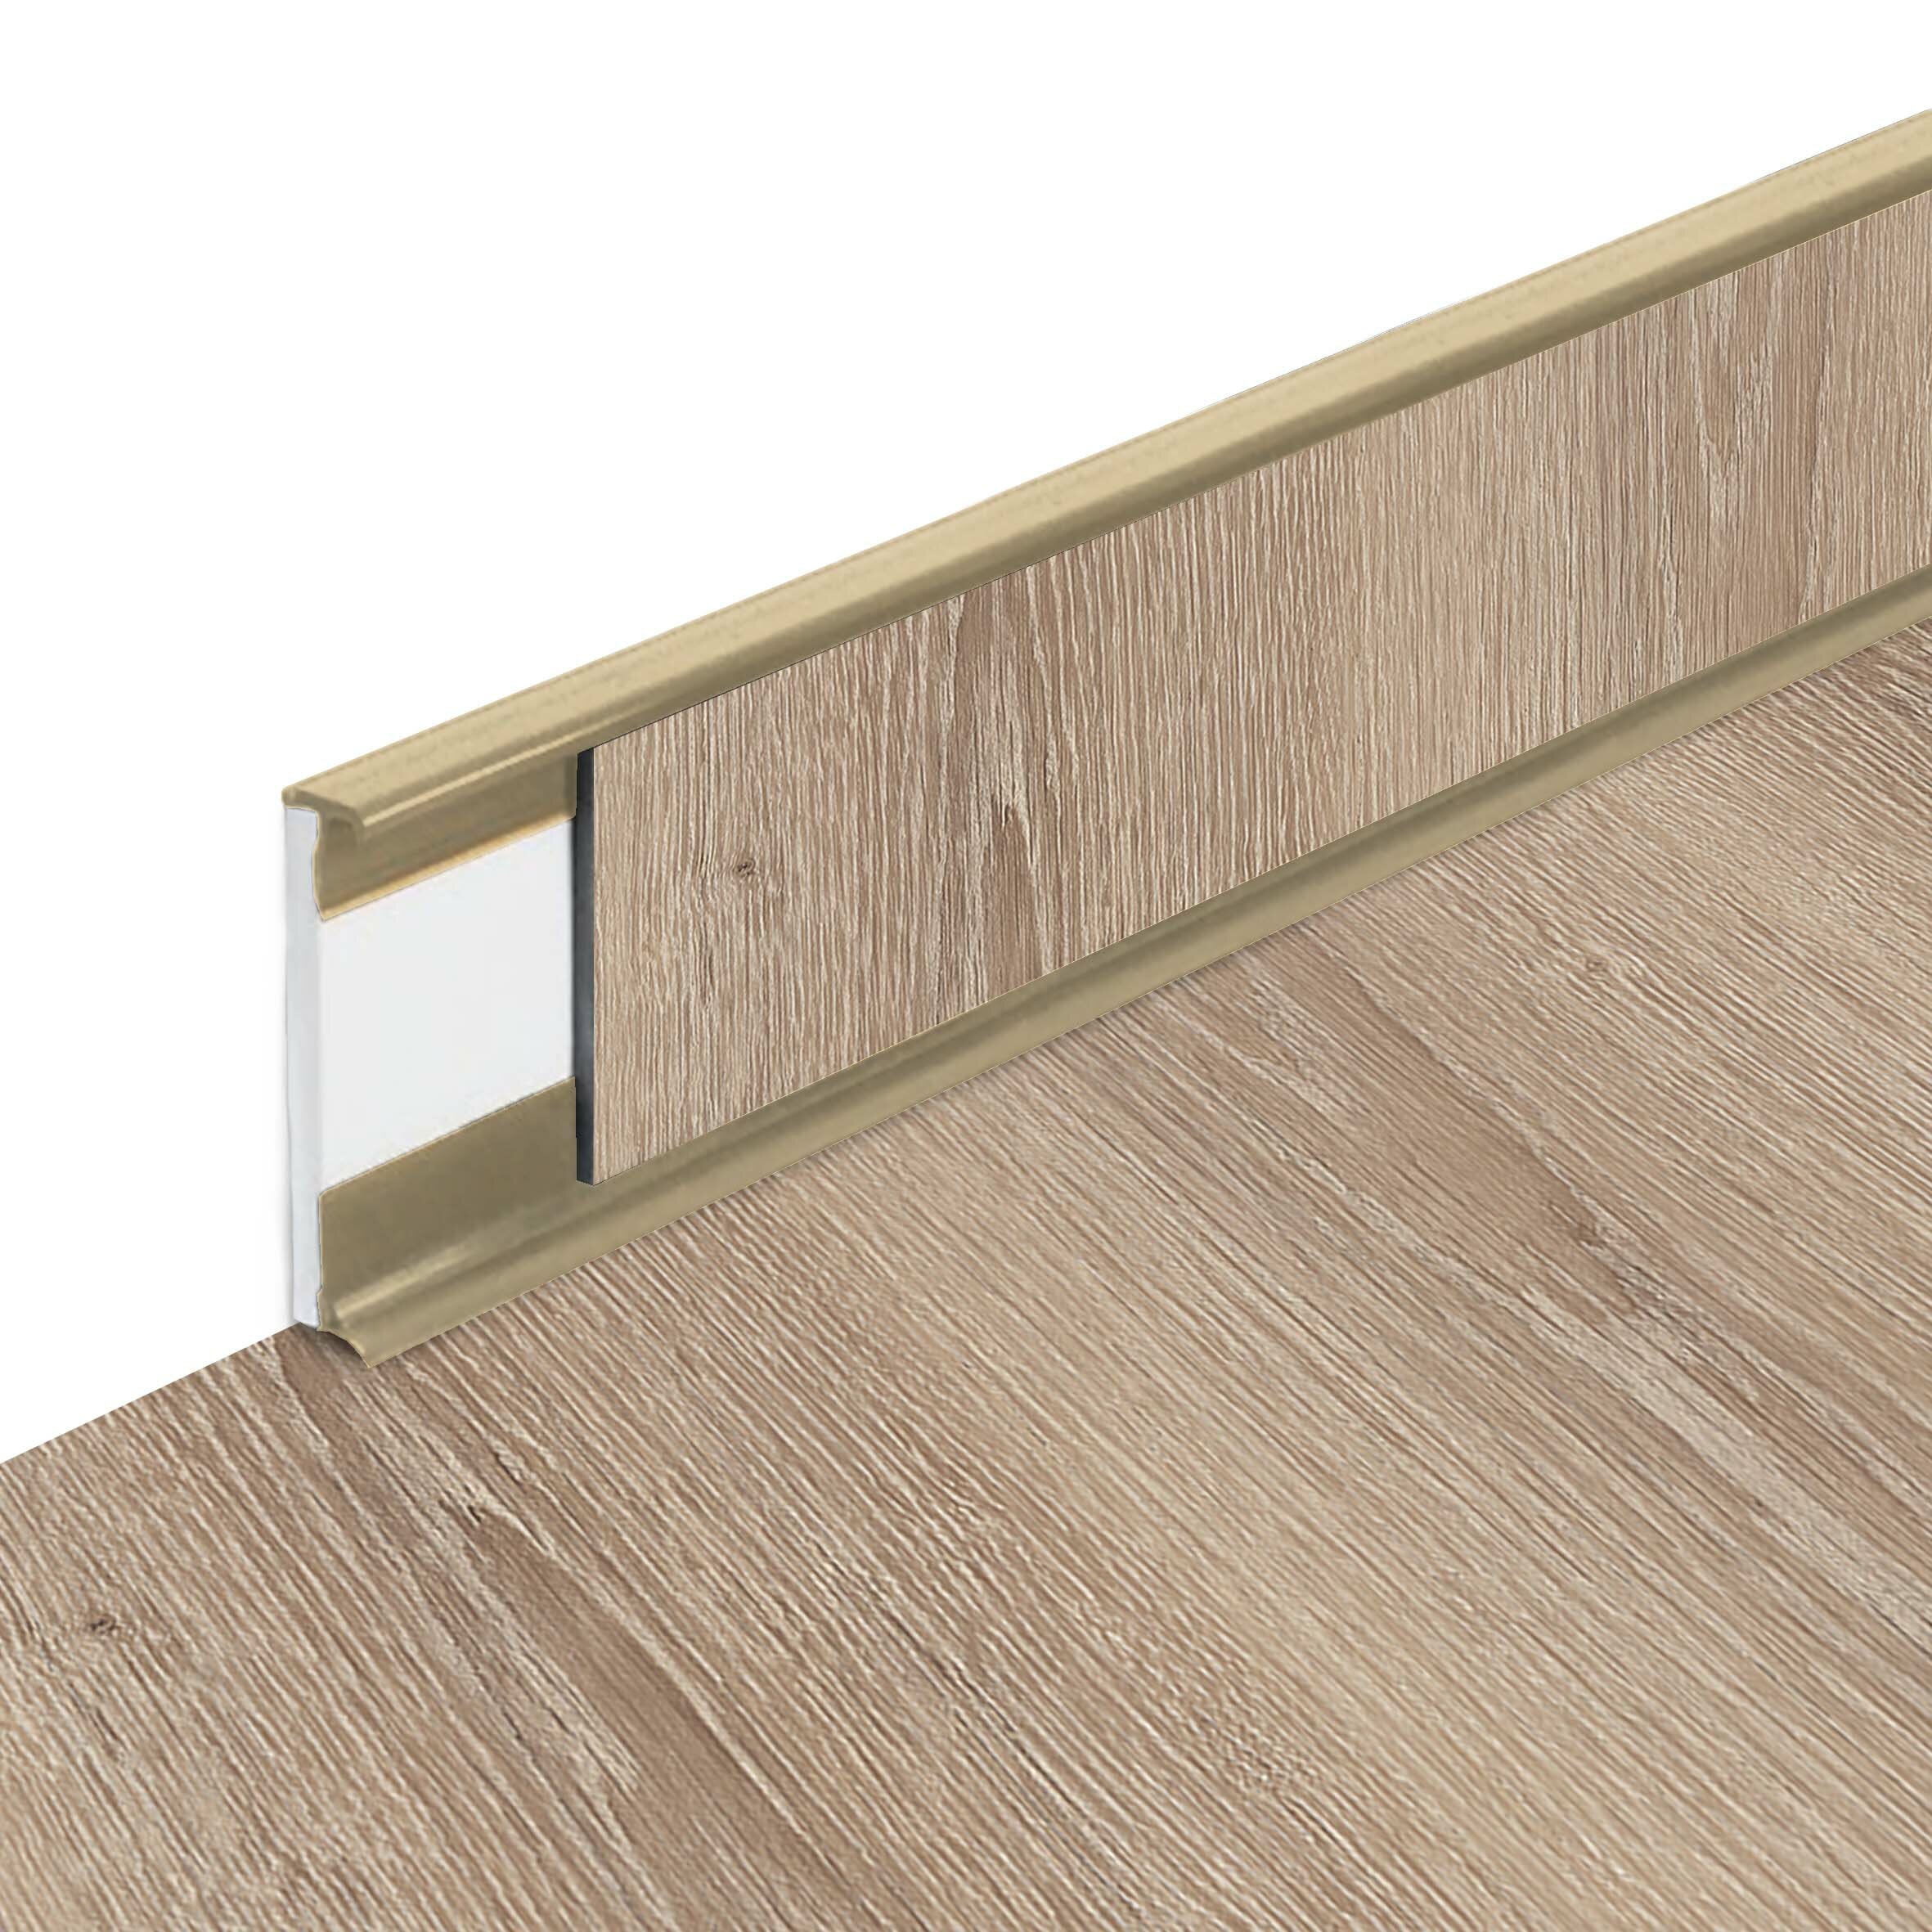 PVC vinylová soklová podlahová lišta Fortelock Business Tyrolean oak W001 Beige - délka 200 cm, výška 5,8 cm, tloušťka 1,2 cm